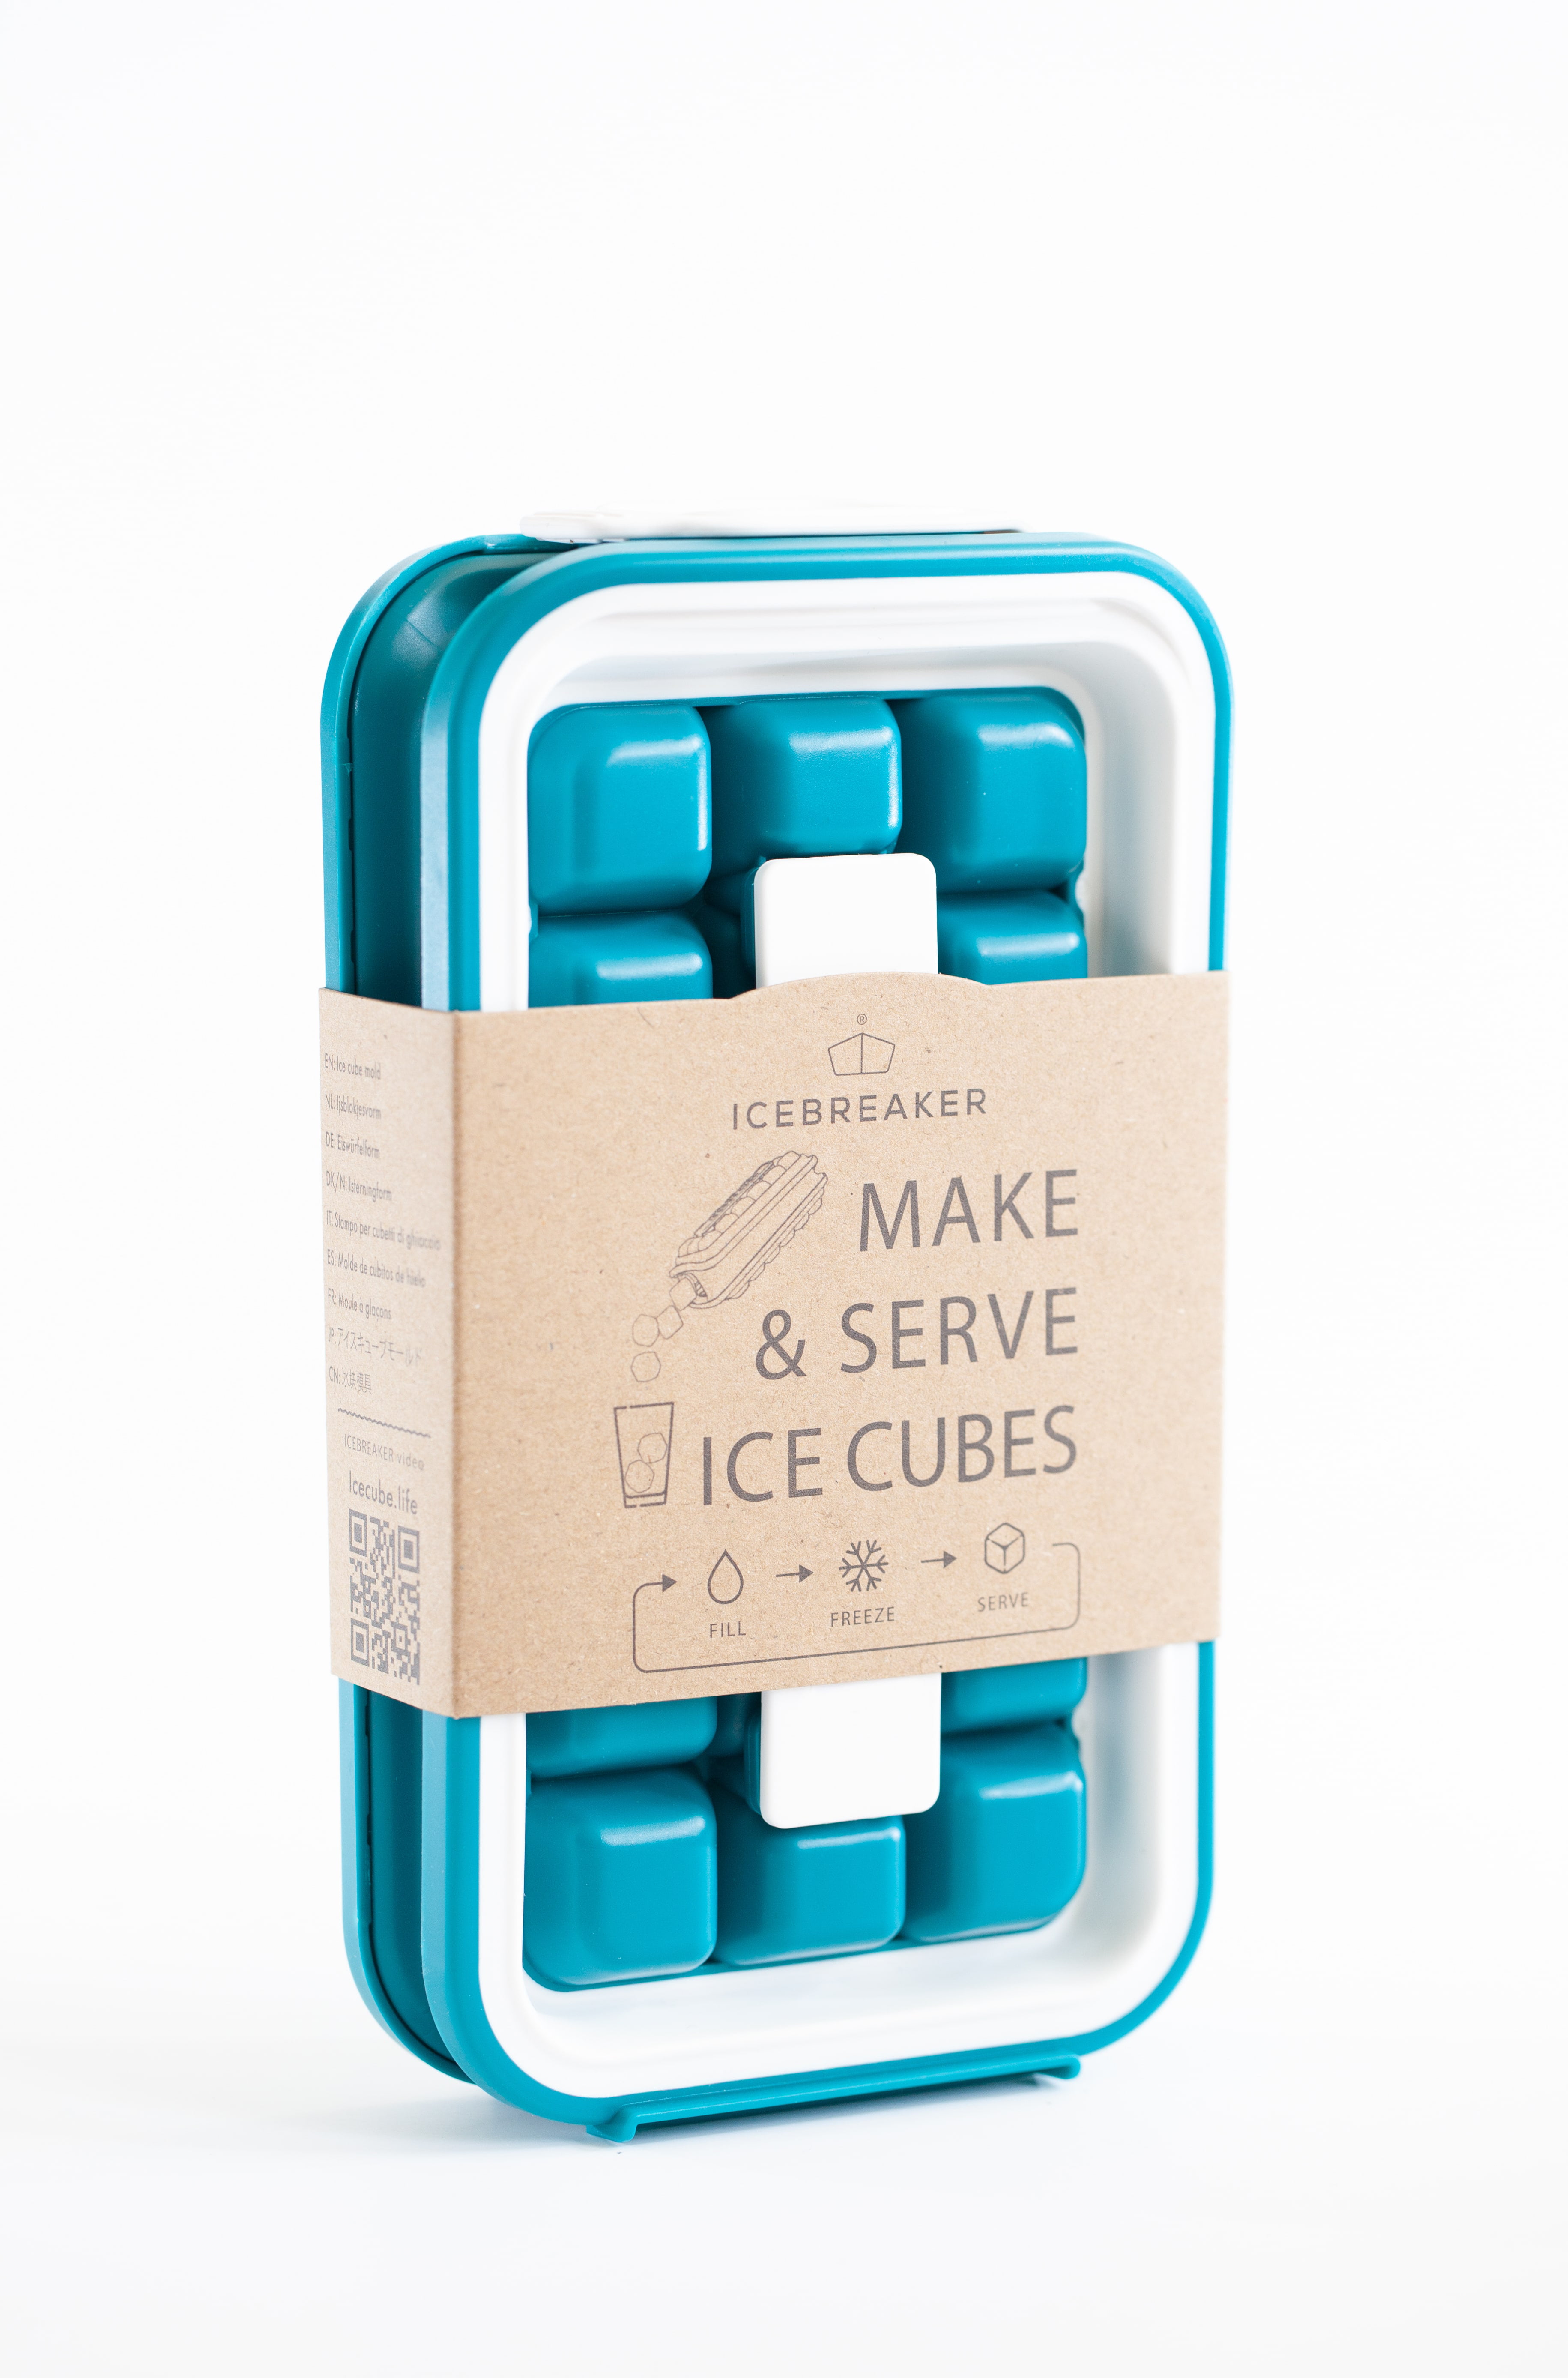 Miman Icebreaker Pop - The Sanitary Ice Tray For Freezer